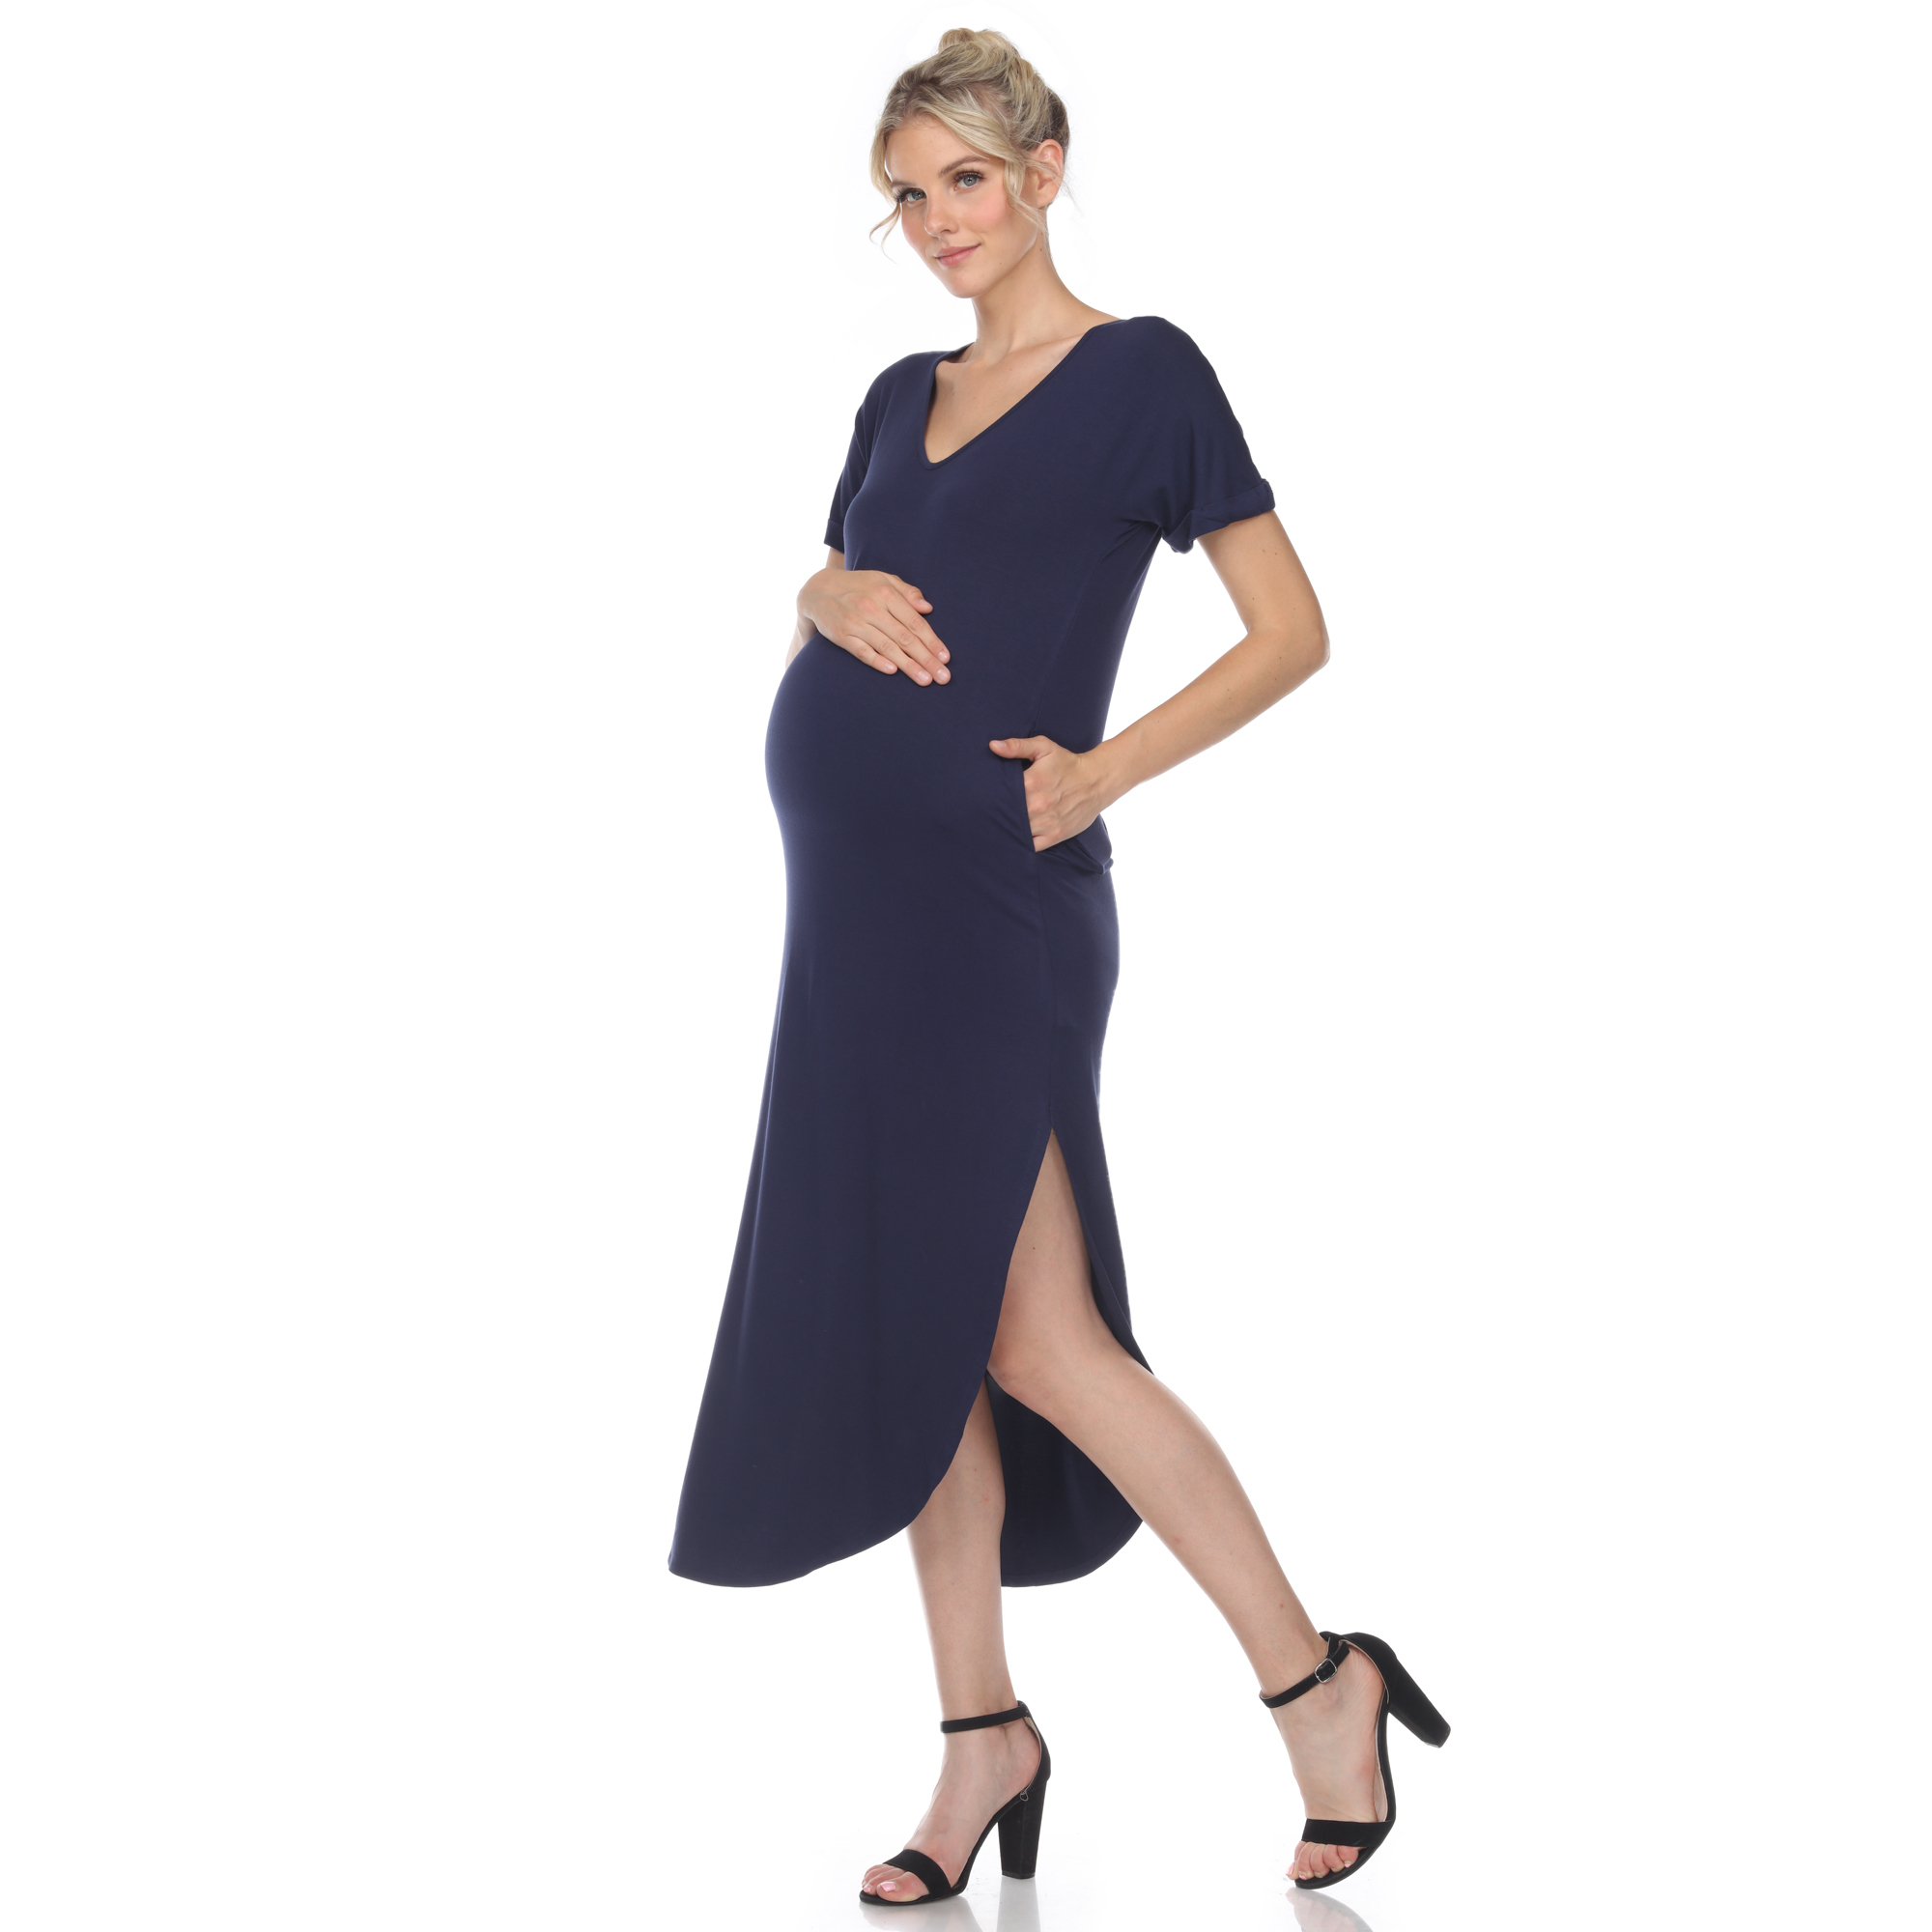 White Mark Womenâs Maternity V-neck Maxi Dress - Charcoal, 2X